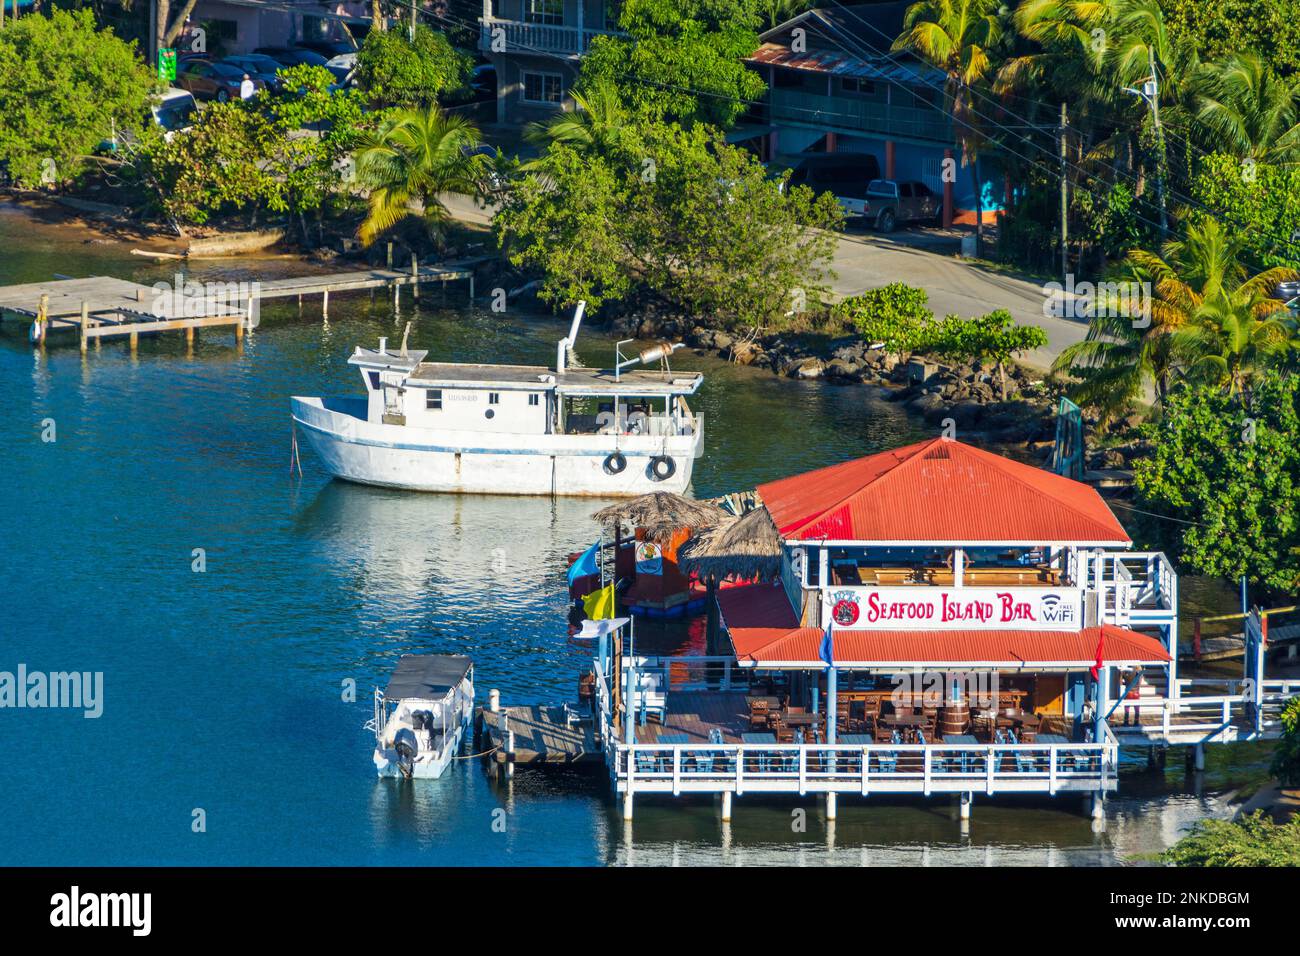 Seafood Island Bar, Roatan, Honduras. Stock Photo